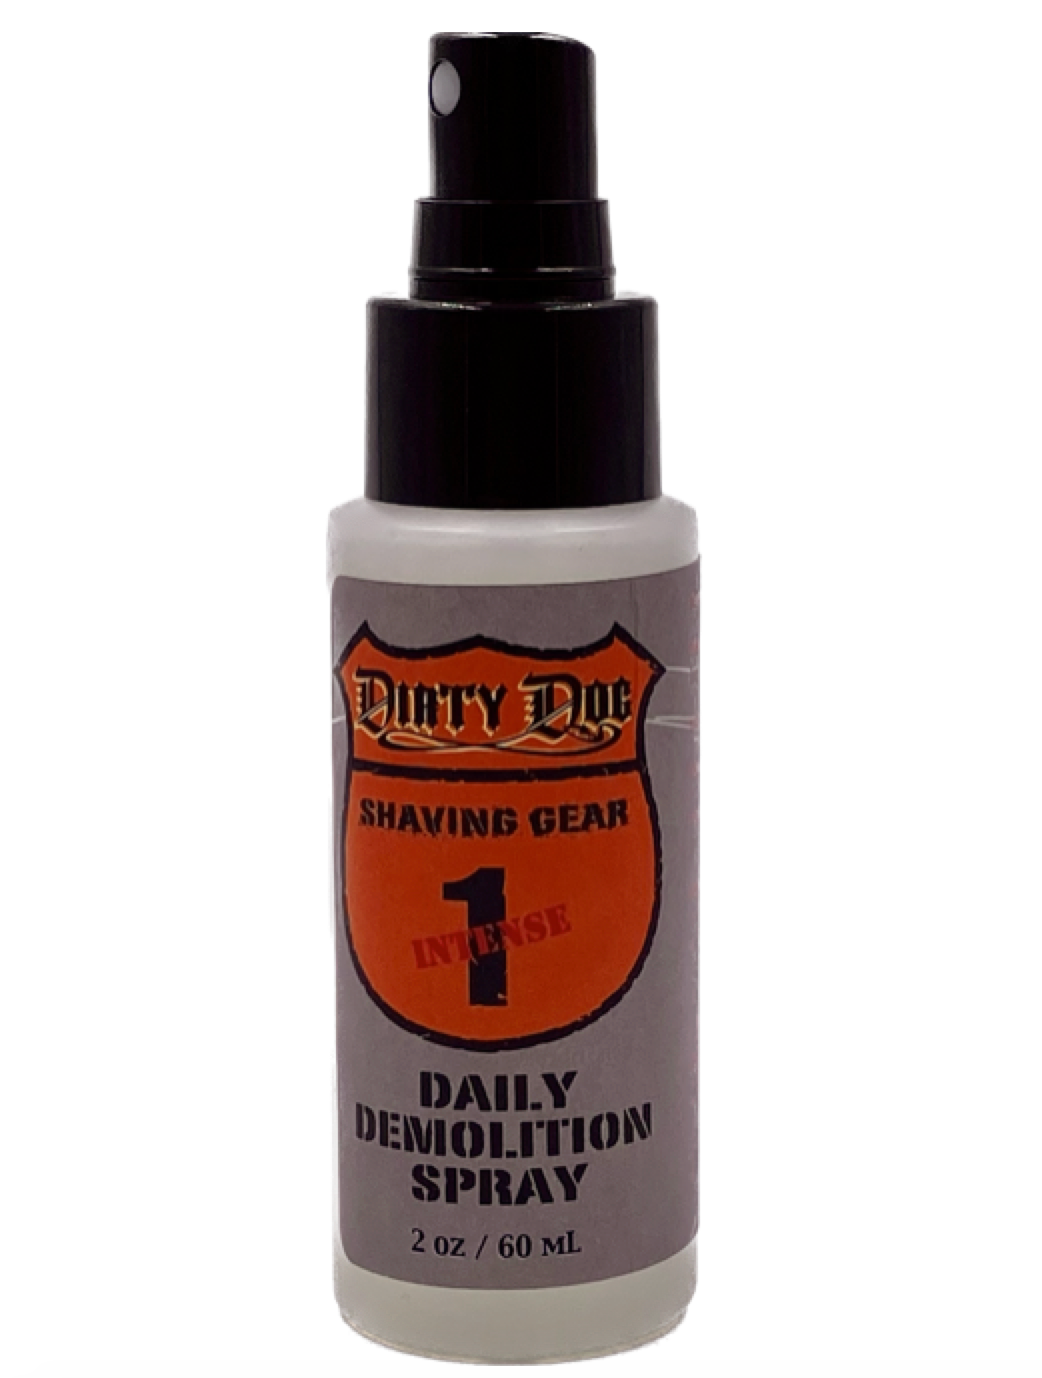 Exfoliation Spray for Men - Natural Fruit & Sugar acids exfoliation to eliminate and prevent ingrown hair, rash and irritation